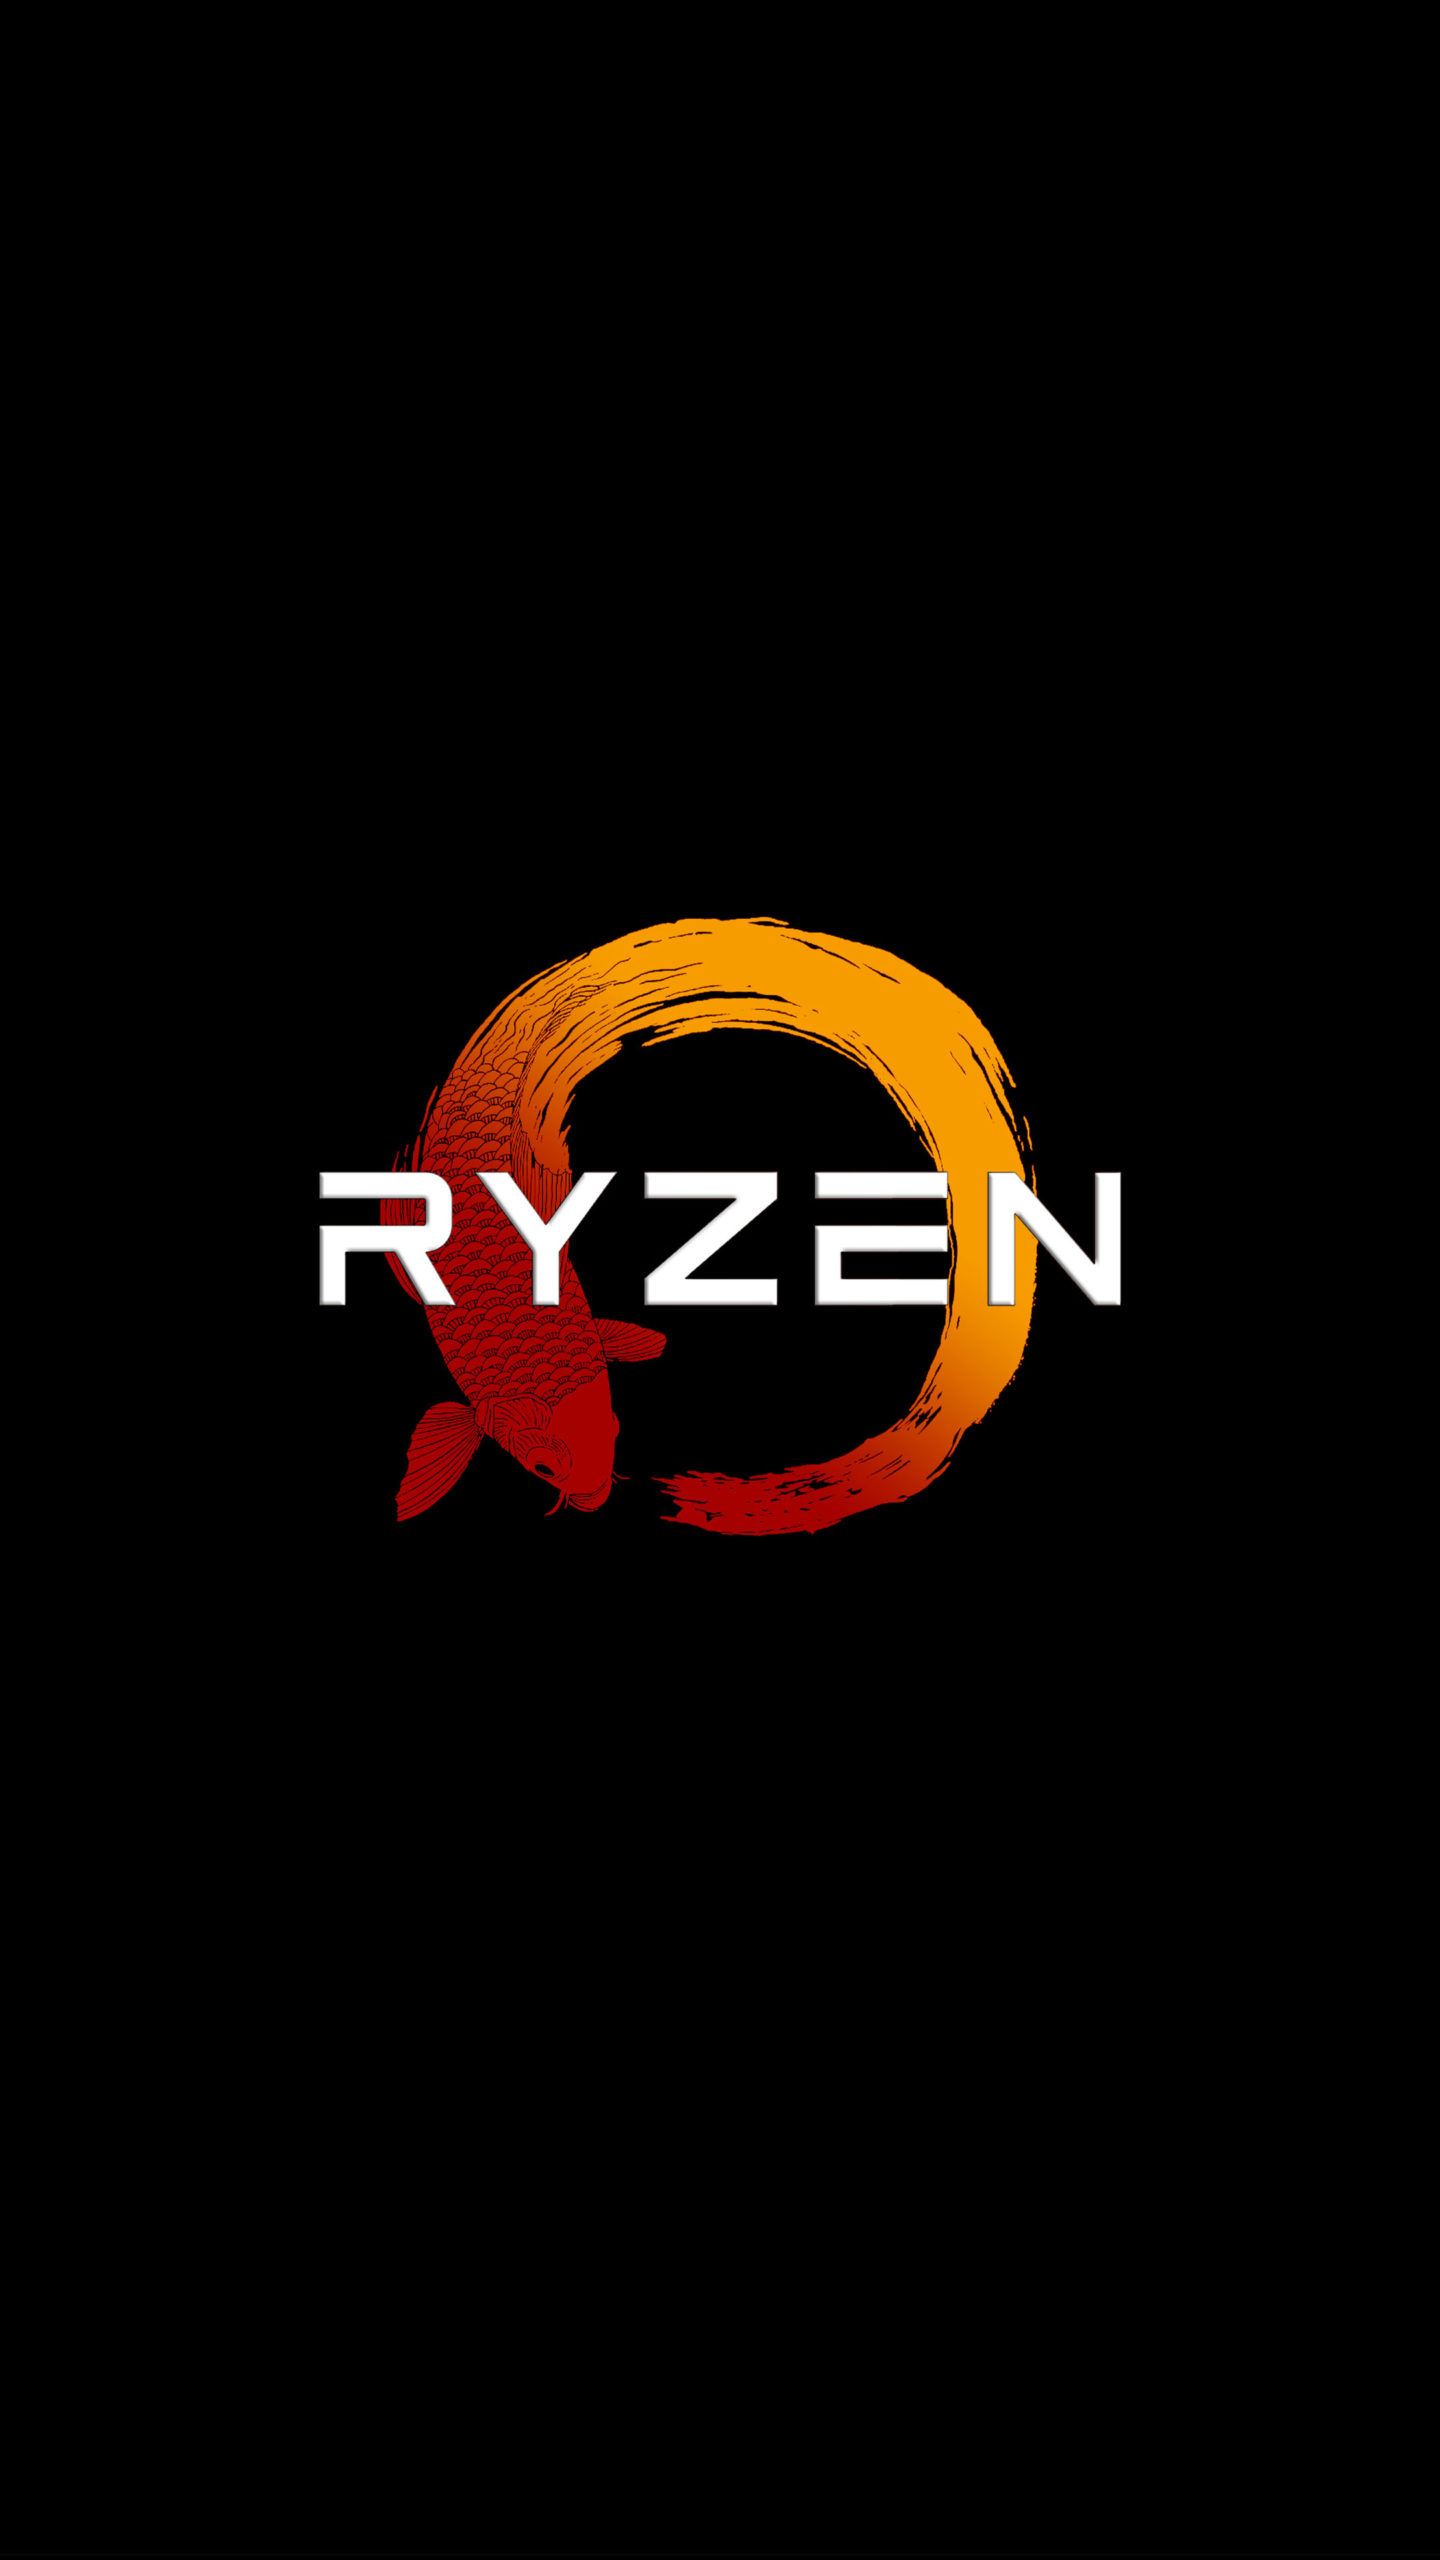 Ryzen Logo 2020 4K Ultra HD Mobile Wallpaper. Wallpaper, Galaxy wallpaper, Mobile wallpaper